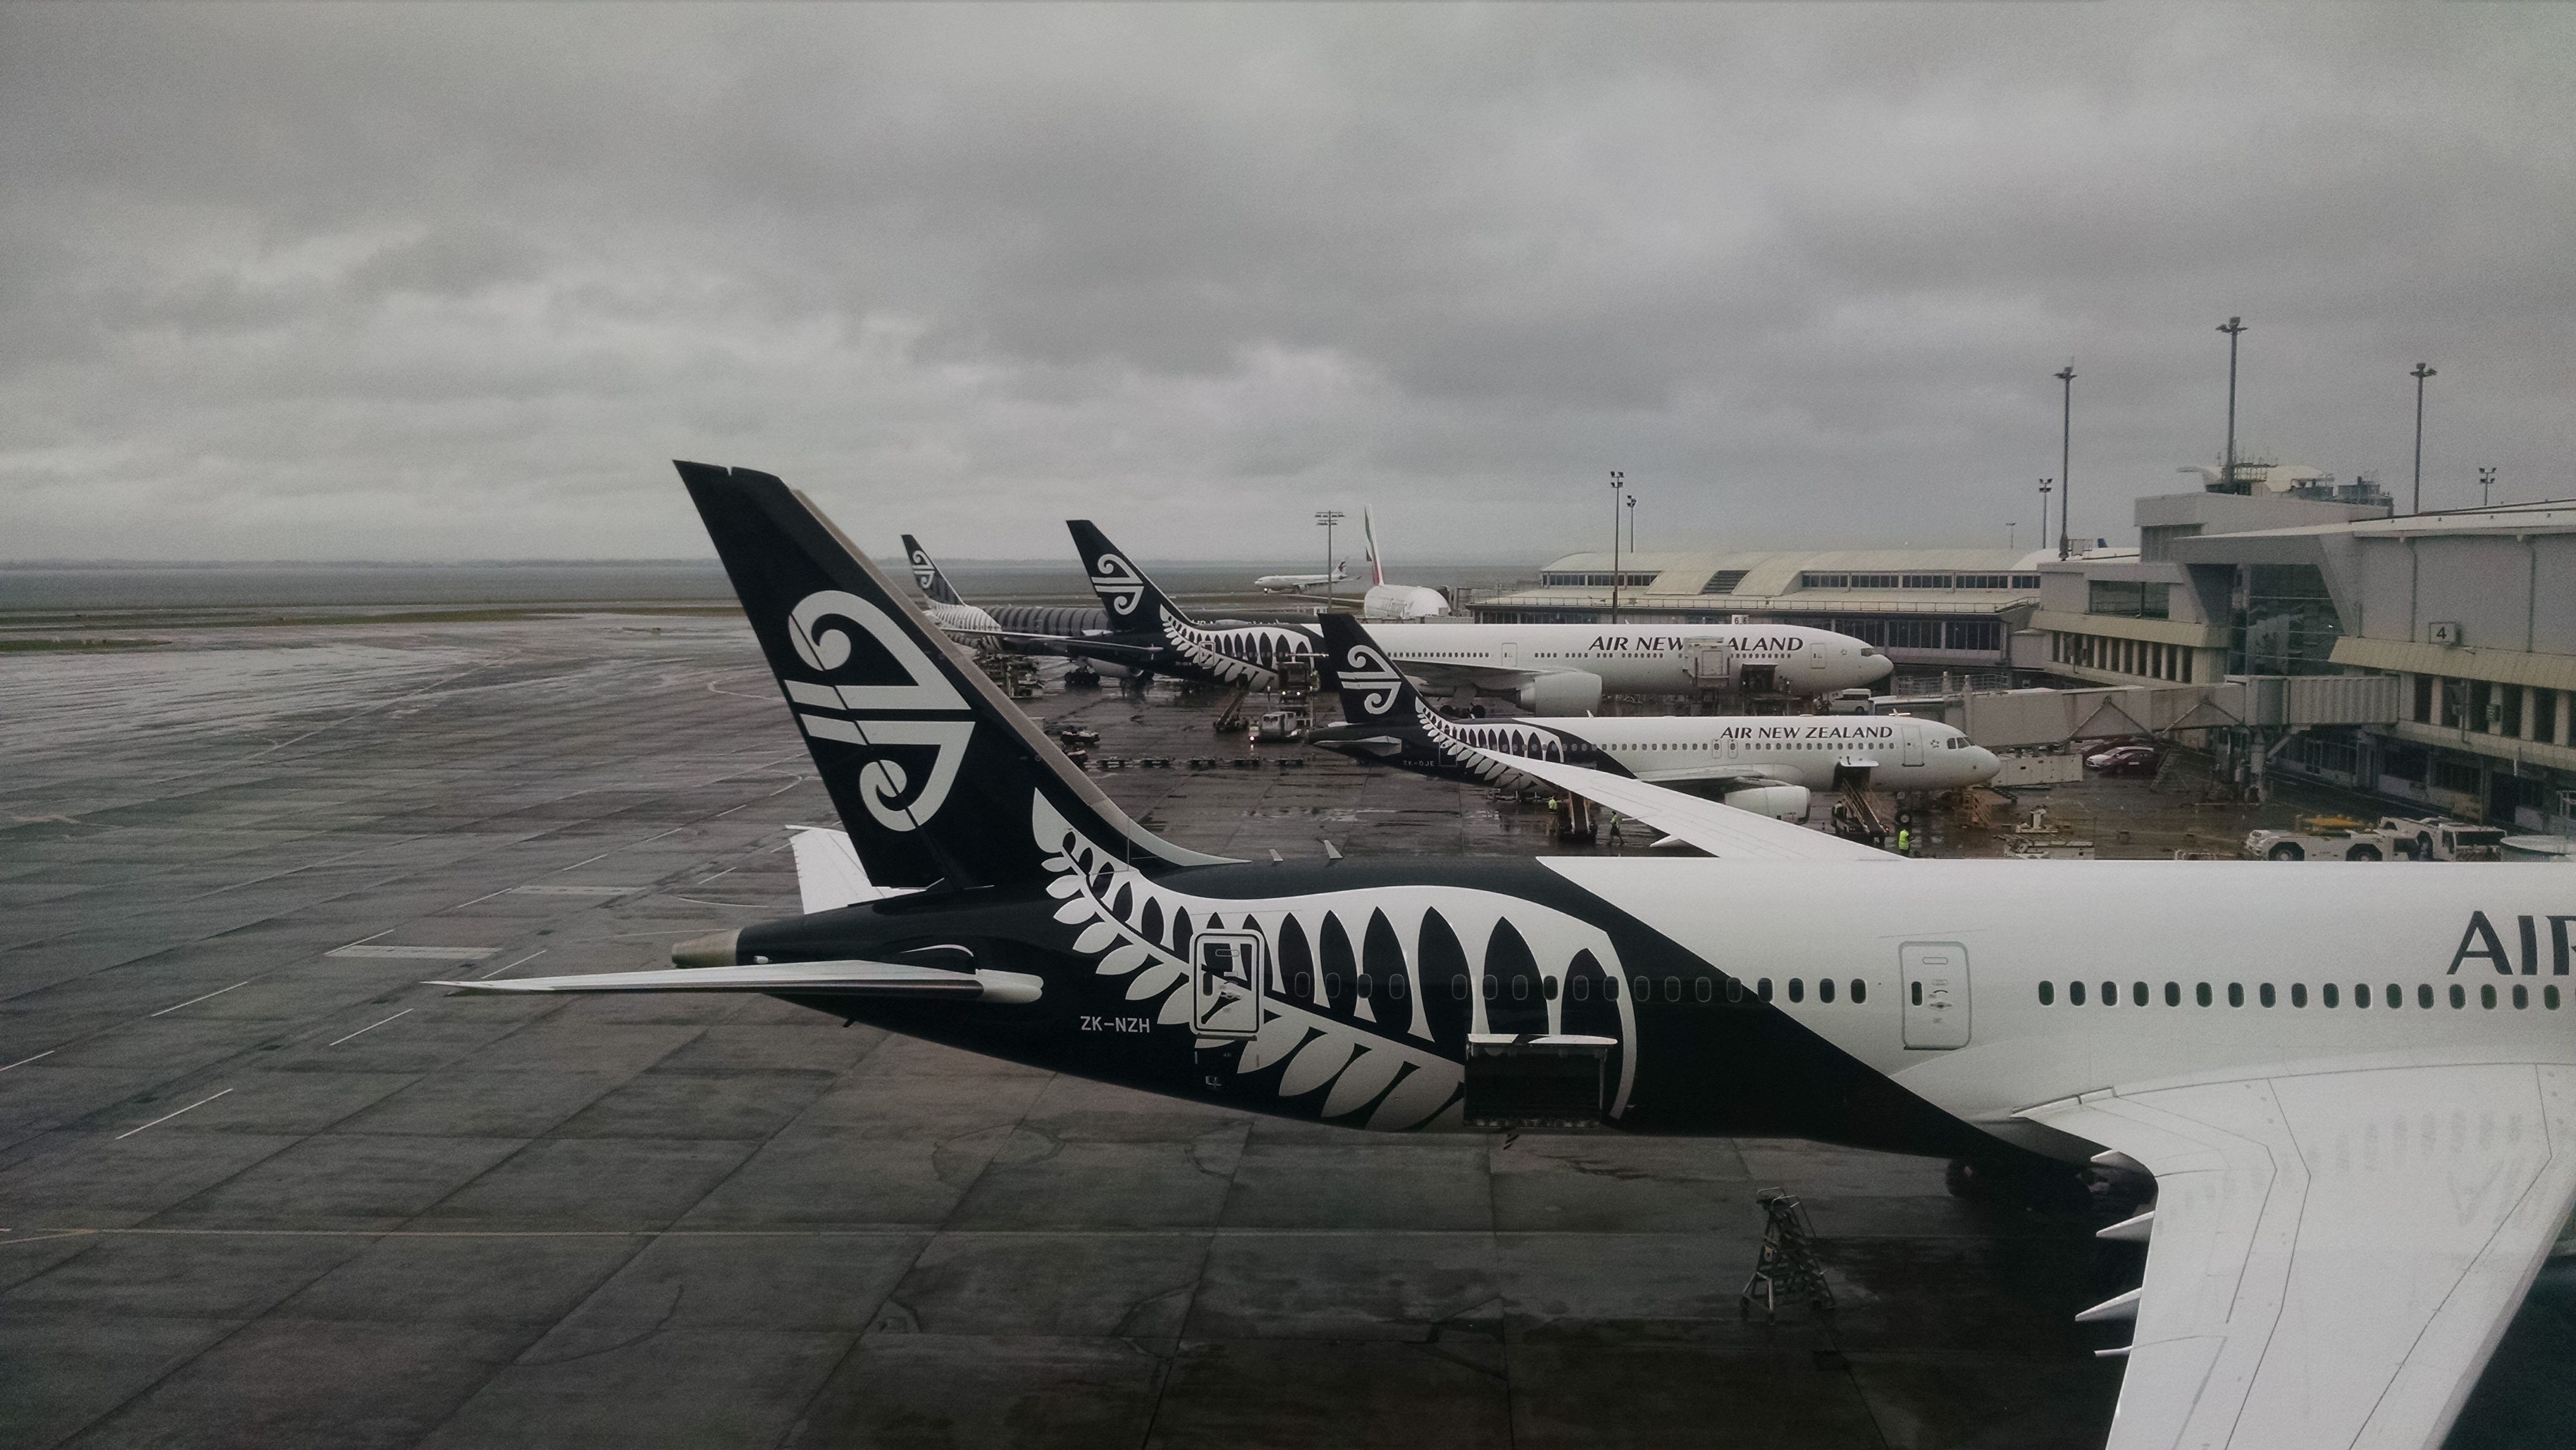 Air New Zealand Aircraft at Auckland Airport